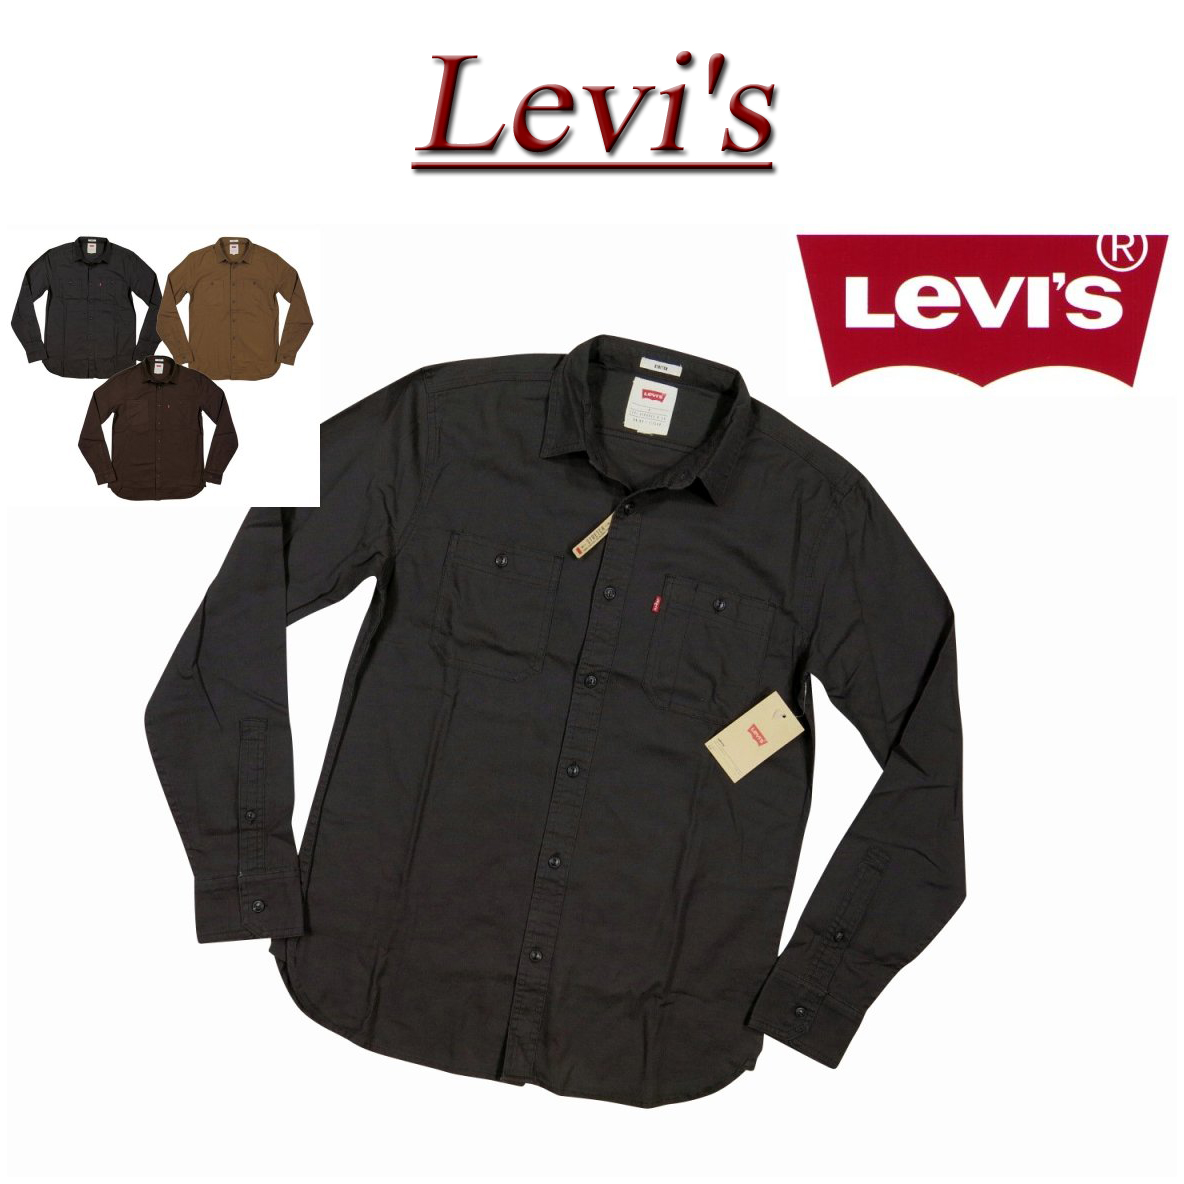 levi's woven shirt